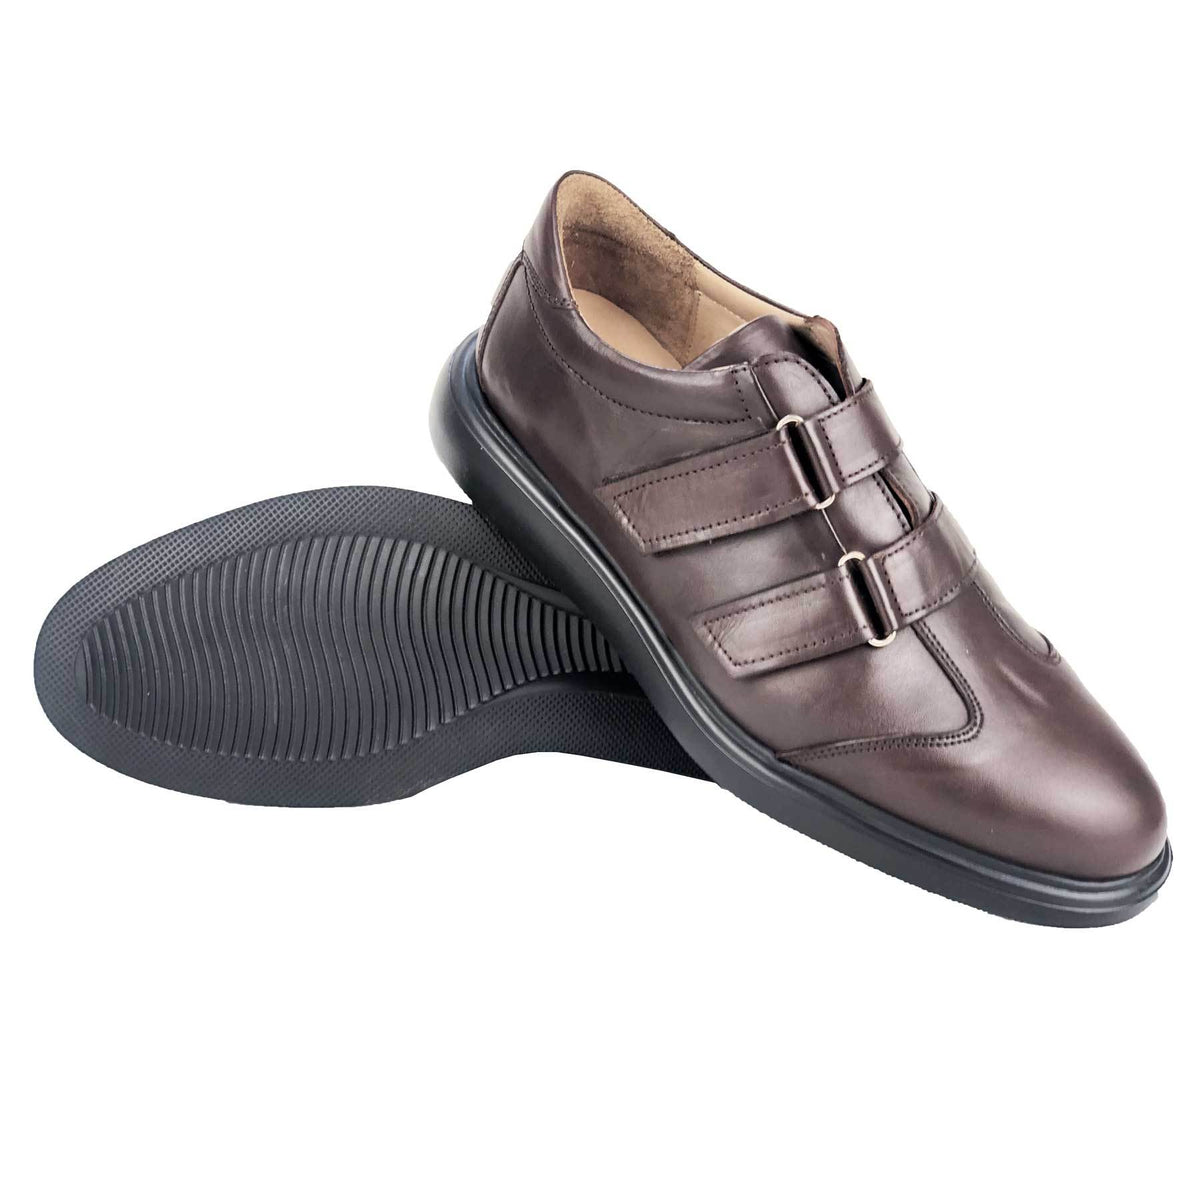 BSK462-015 - Chaussure cuir MARRON - deluxe-maroc